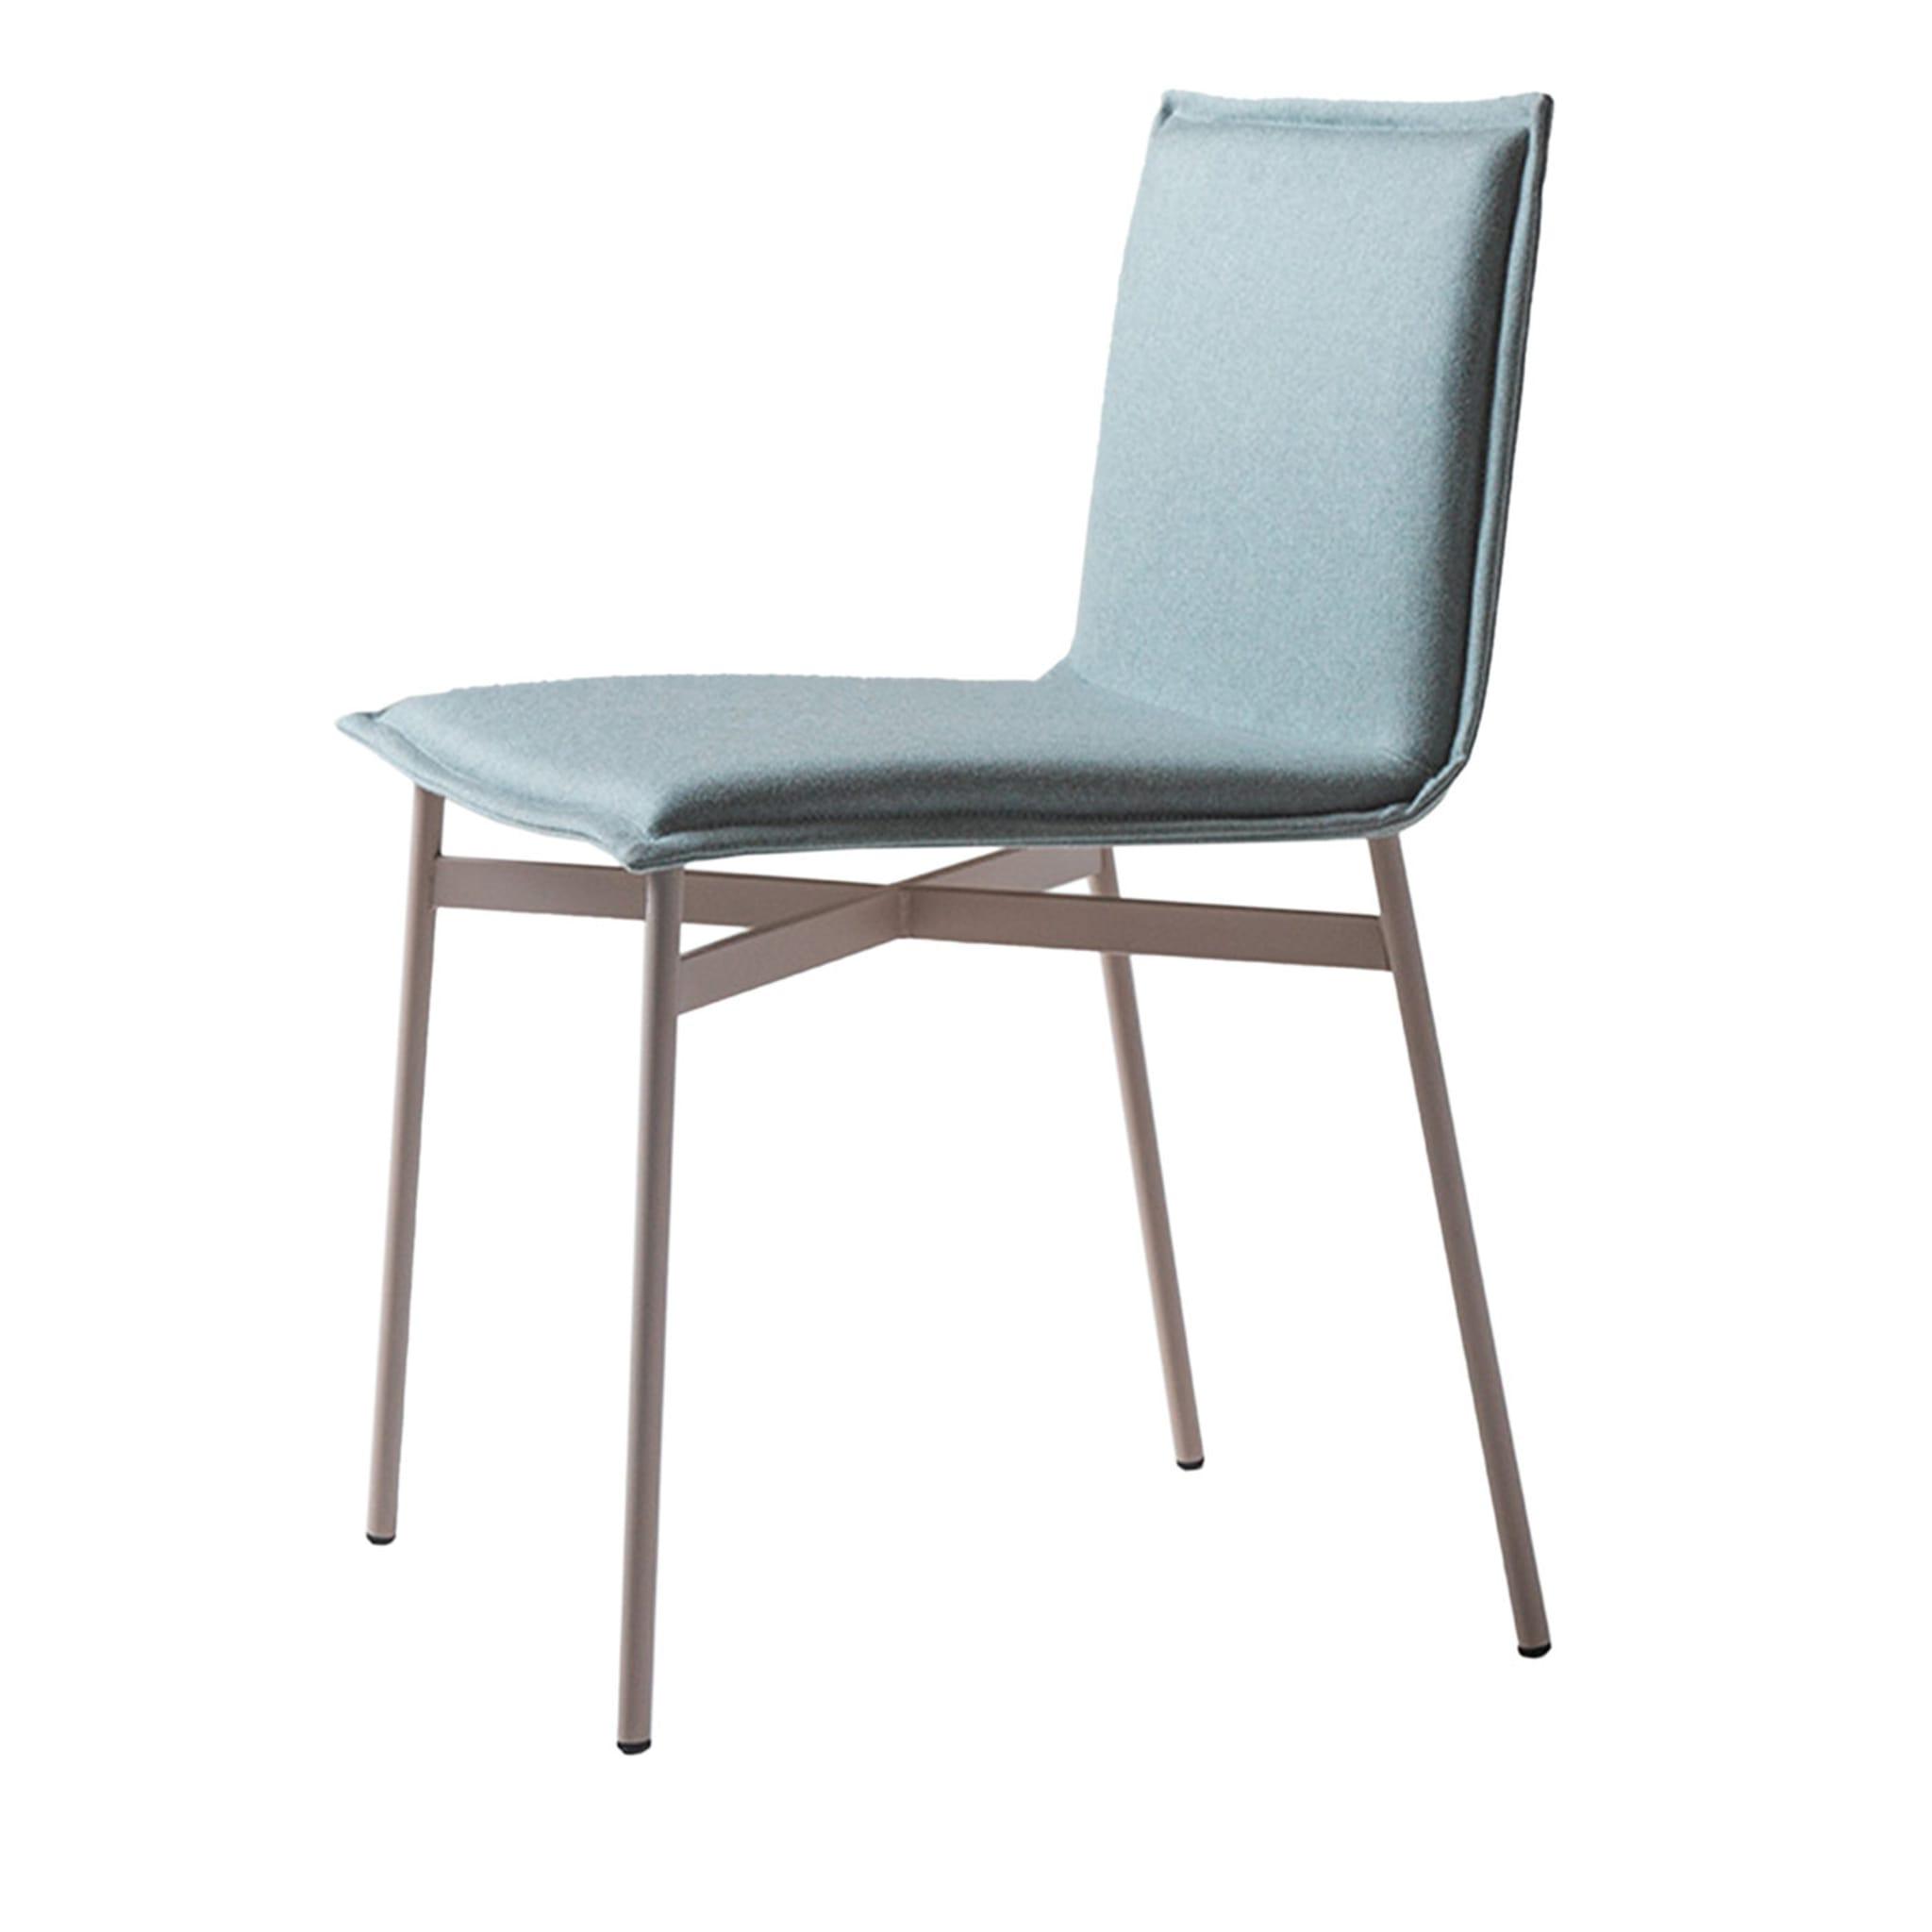 Zazu Exquisite Italian Chair Repeat